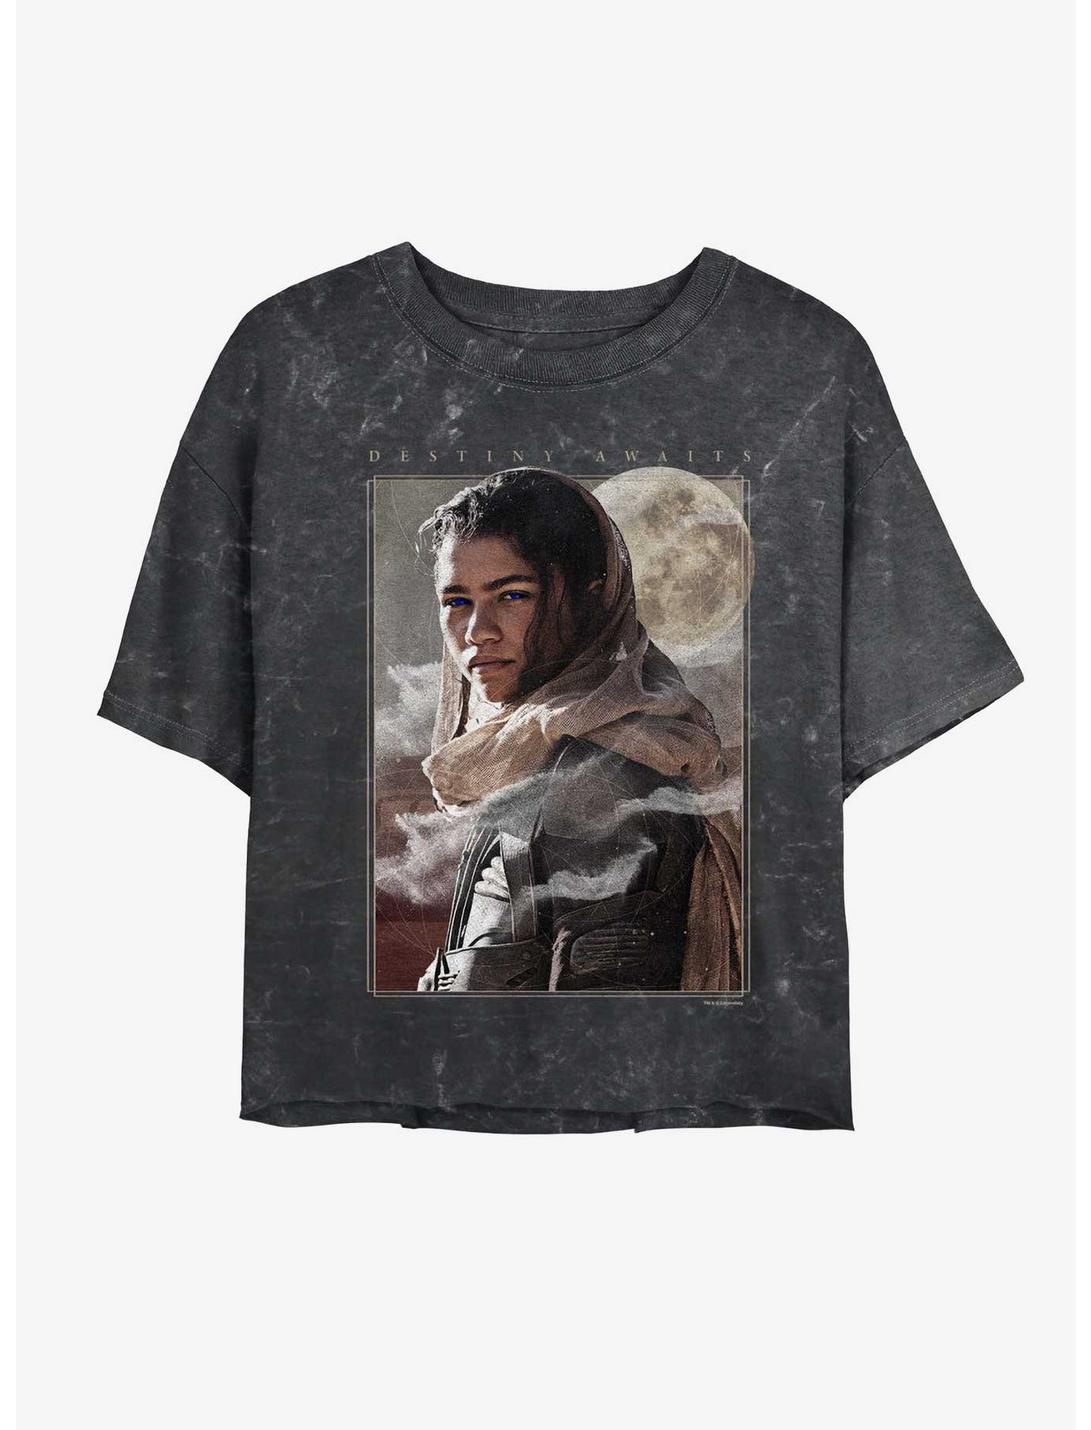 Dune Destiny Awaits Chani Mineral Wash Womens Crop T-Shirt, BLACK, hi-res